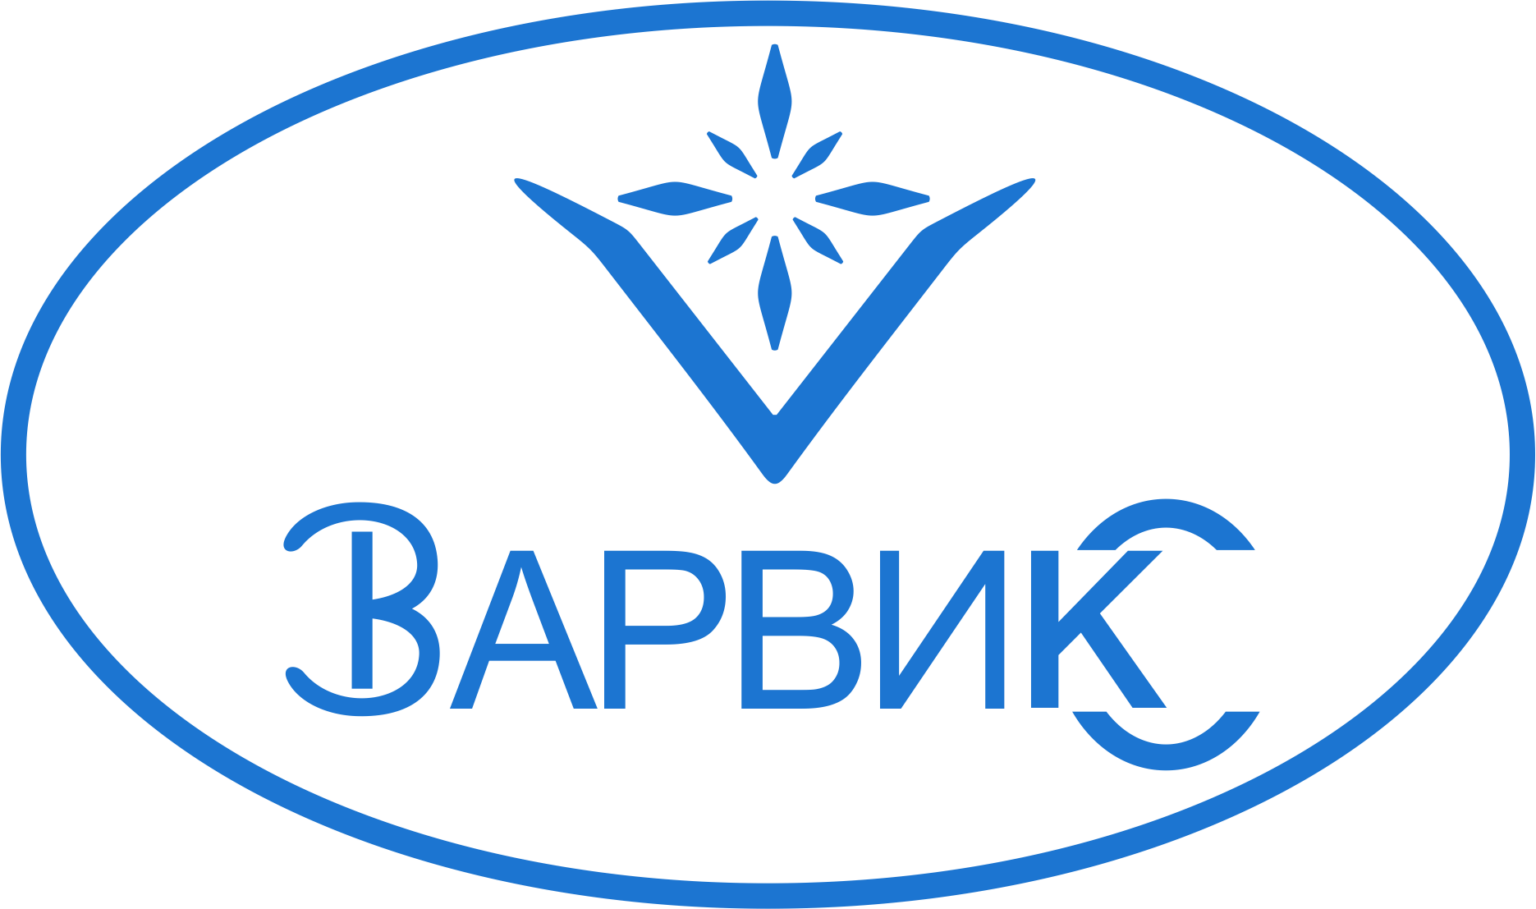 ООО “ОМК Варвикс” - Город Обнинск logo.png